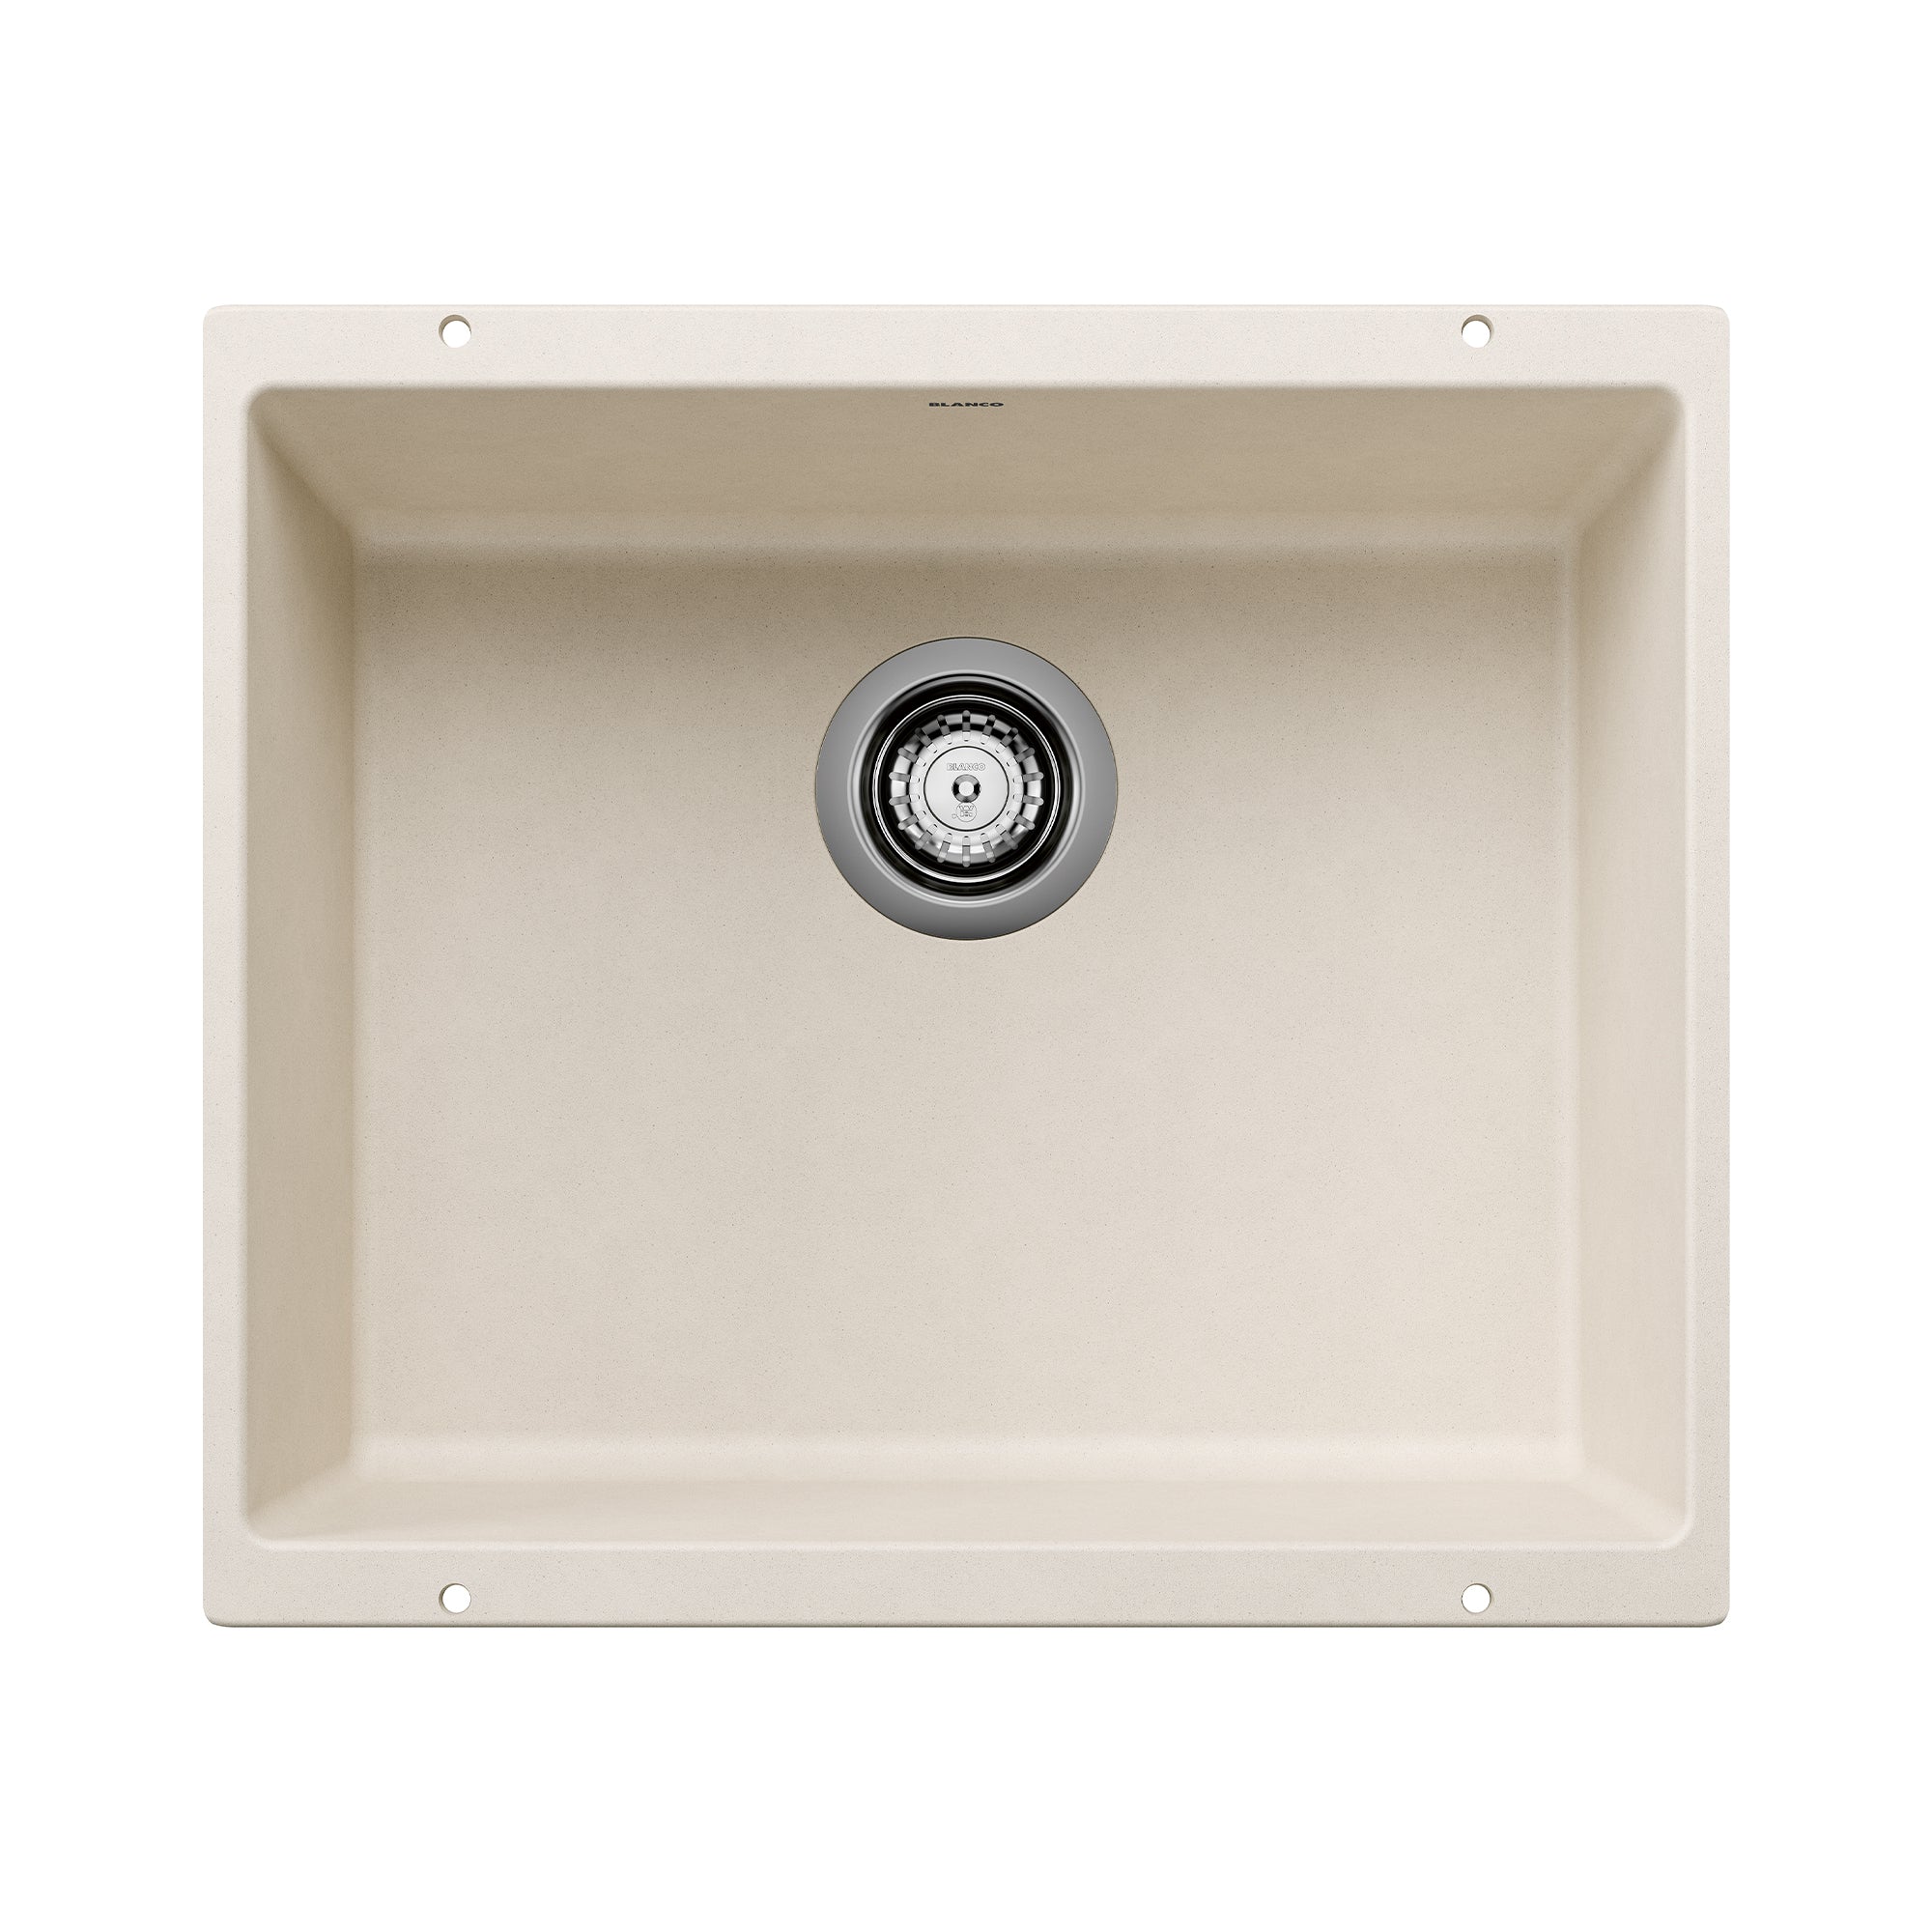 Blanco 402882 Precis SILGRANIT 21 L x 18 W Single Bowl Granite Undermount Kitchen Sink Finish: Soft White Wayfair